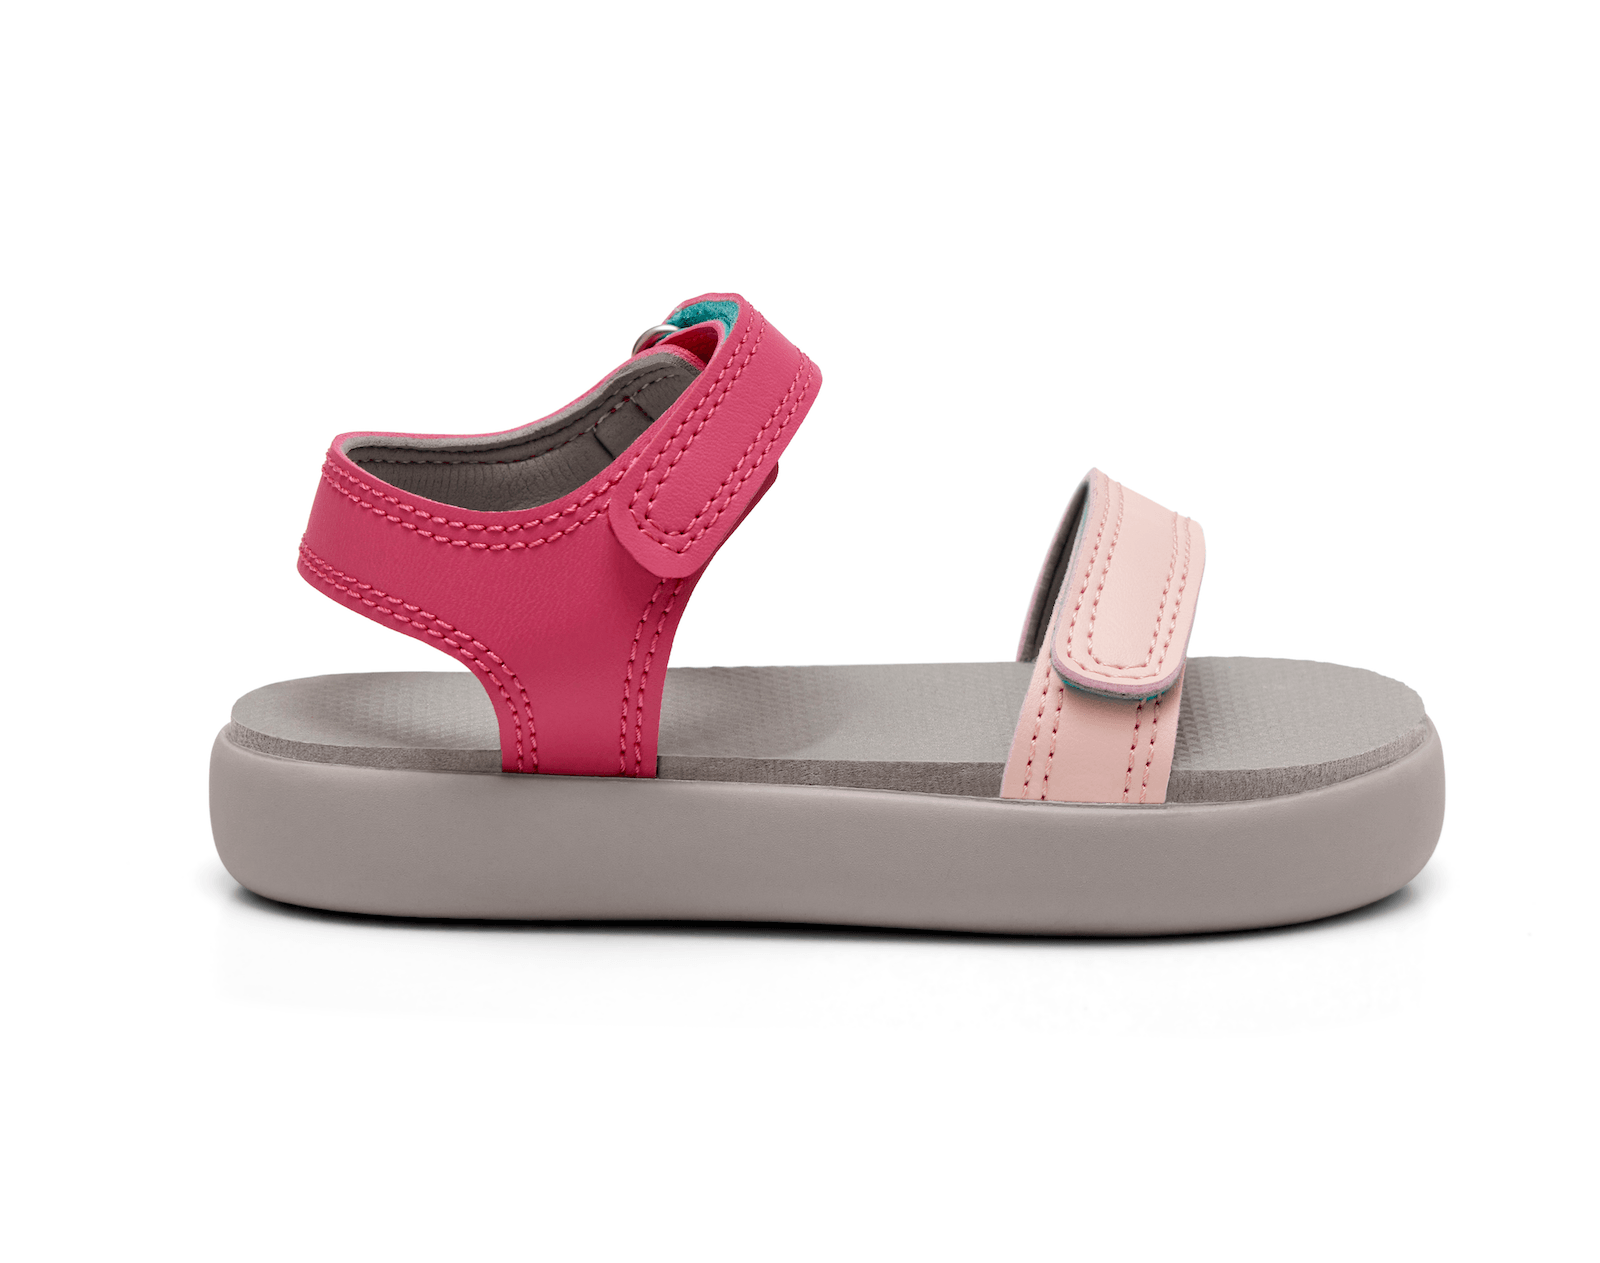 Summer Sandals - Blush & Candy Pink - 7